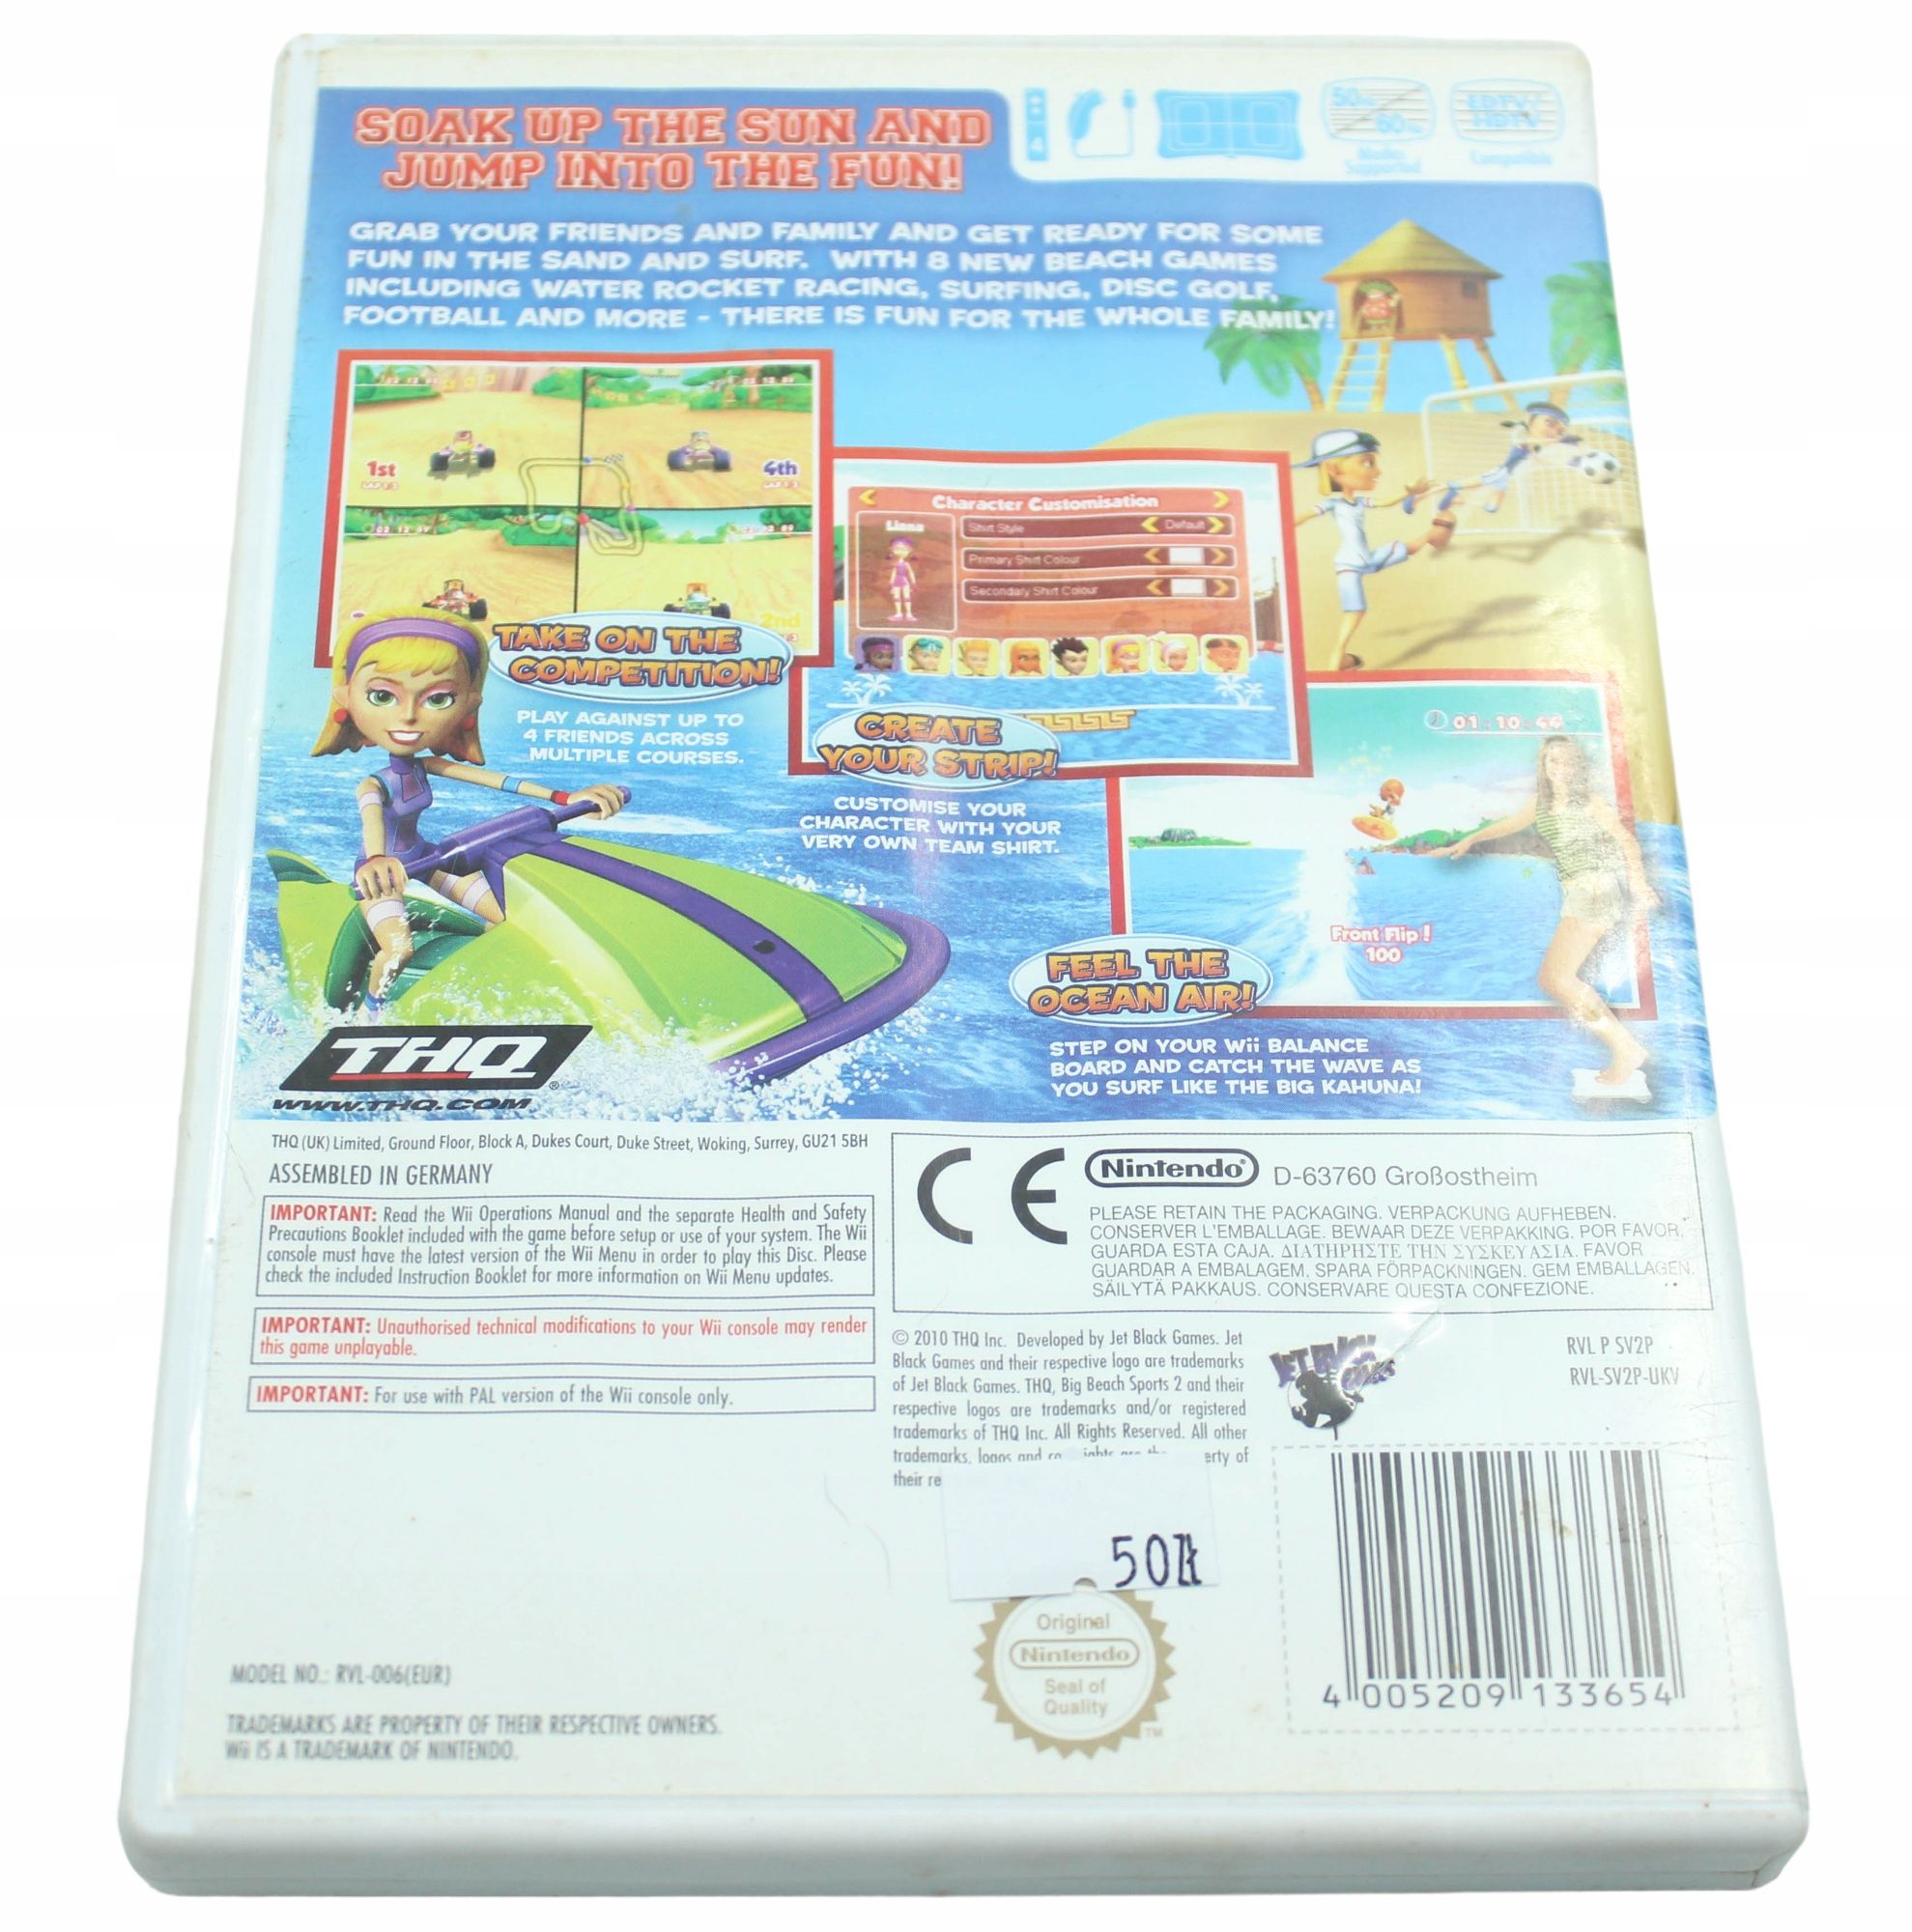 Big Beach Sports 2 Nintendo Wii